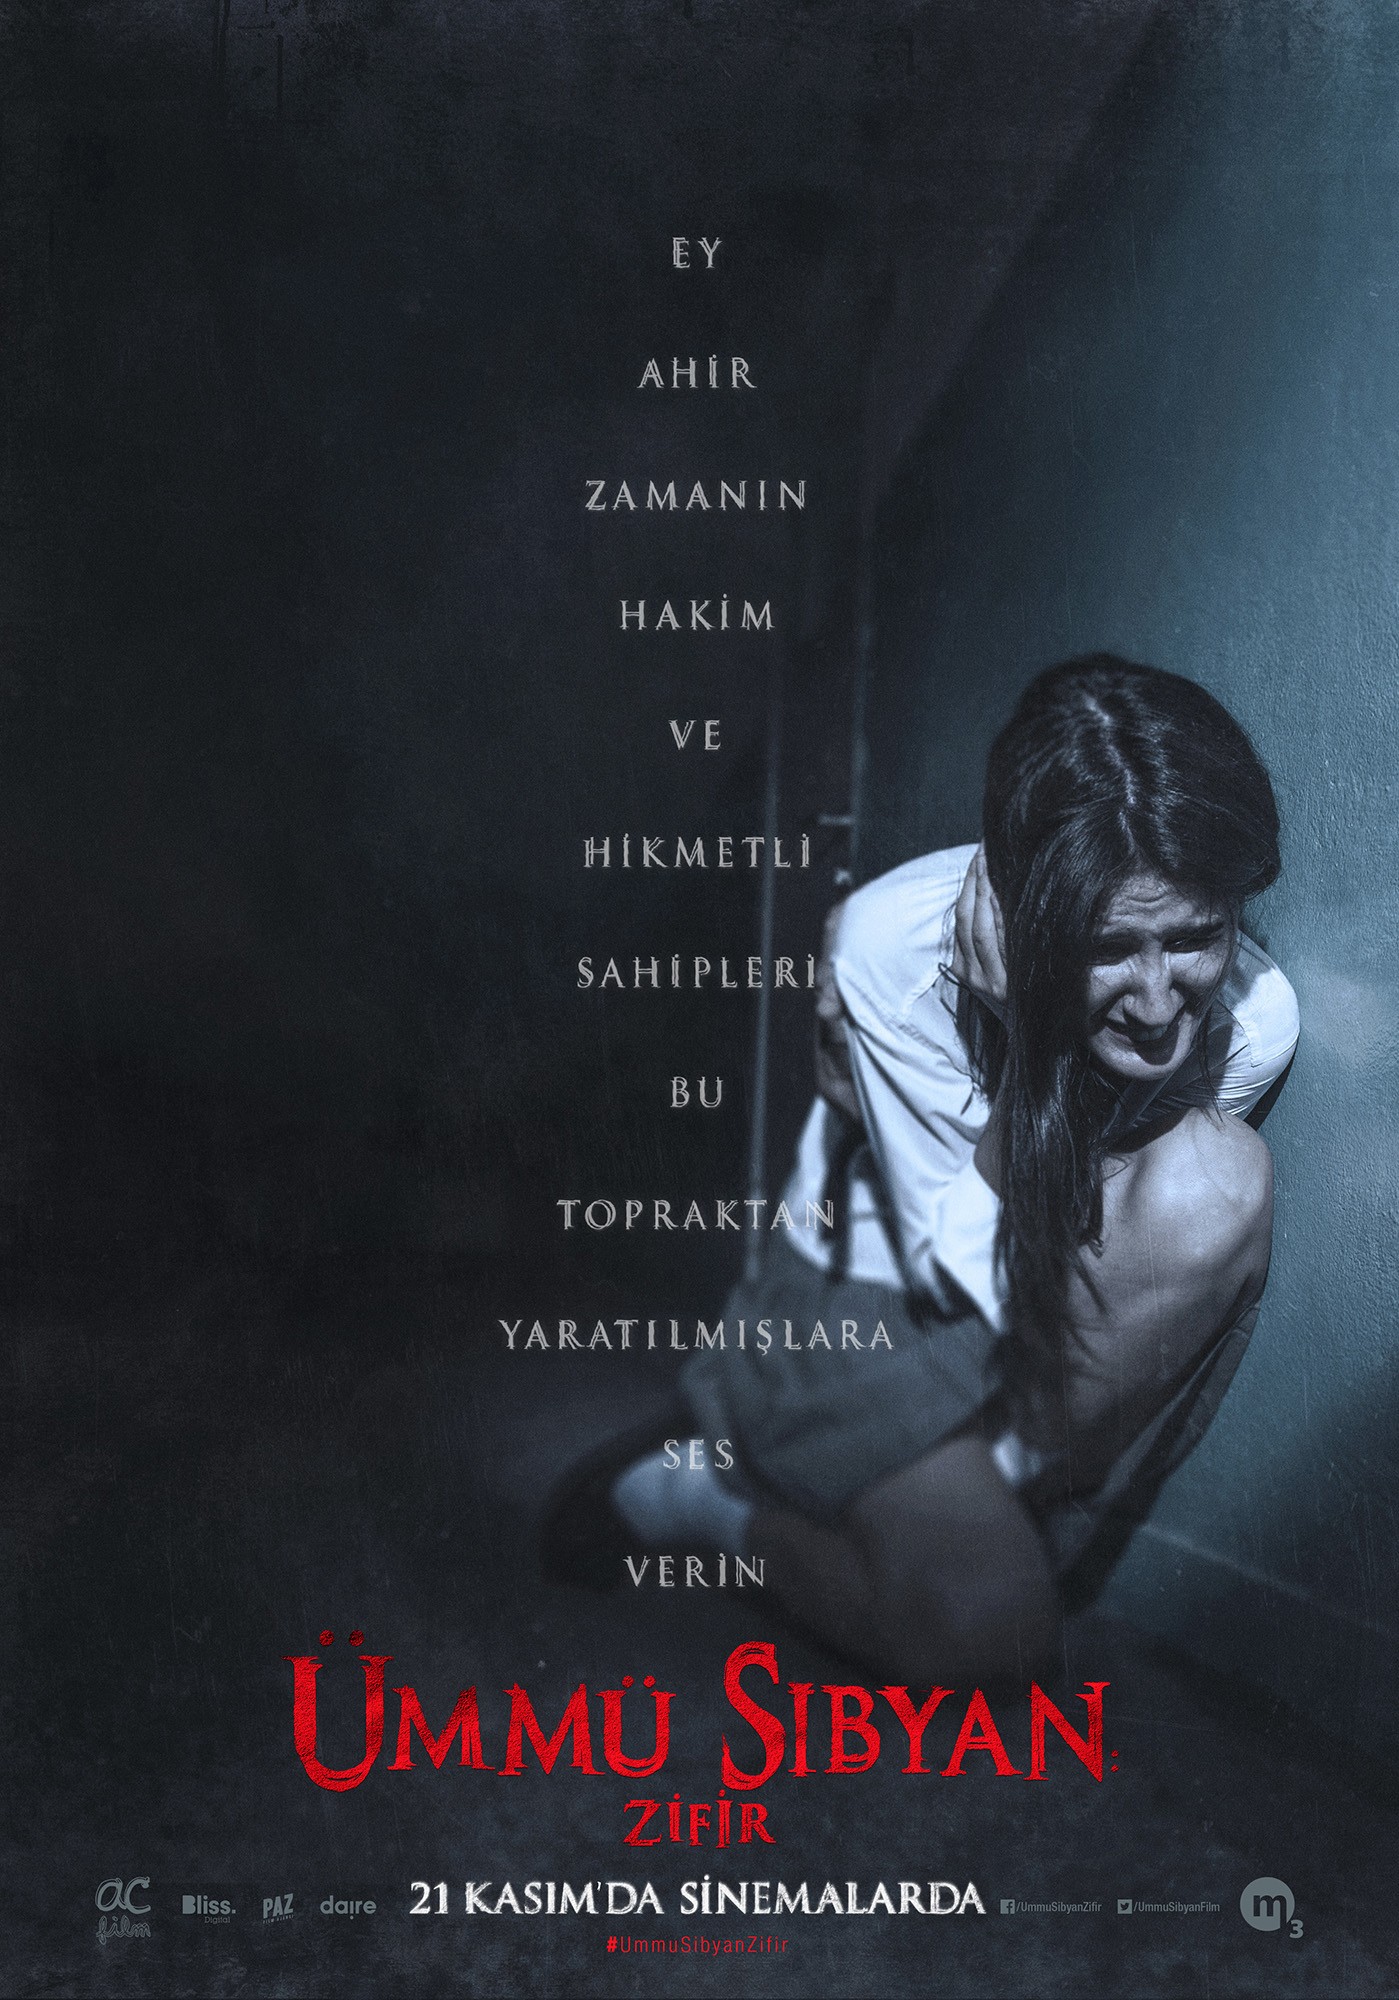 Mega Sized Movie Poster Image for Ümmü Sıbyan Zifir (#8 of 12)